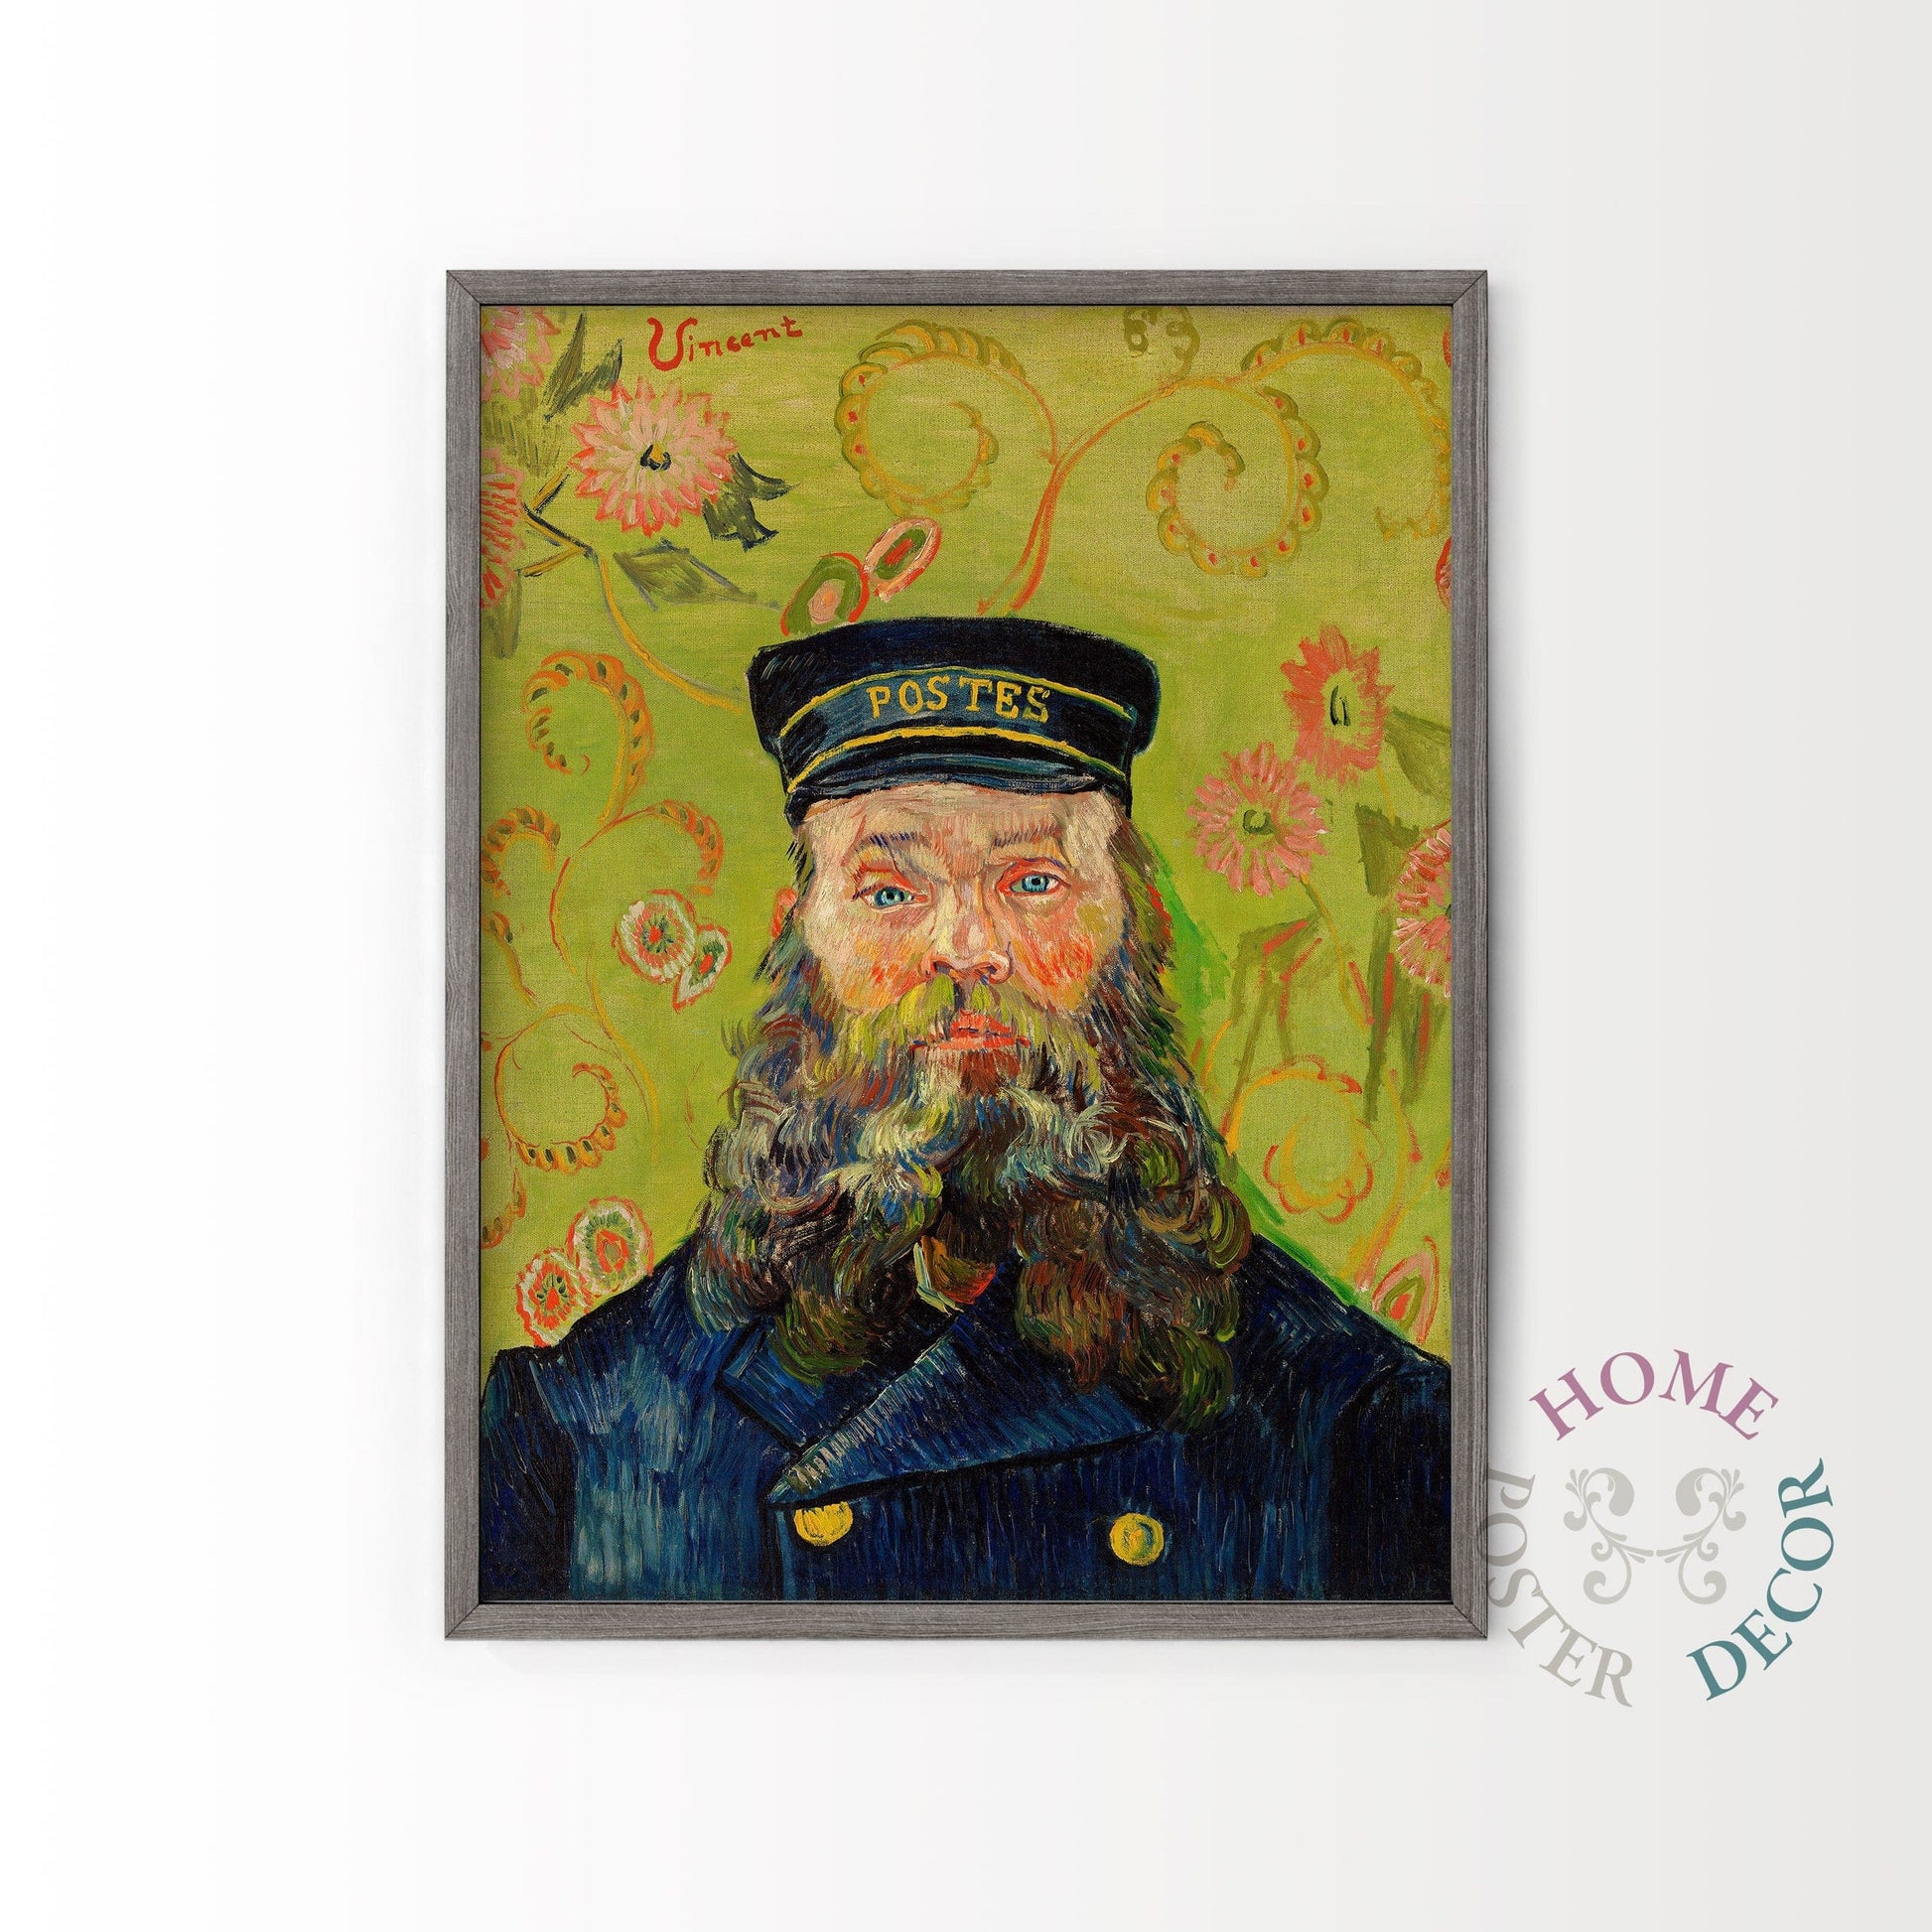 Home Poster Decor Vincent Van Gogh, Van Gogh Portrait, The Postman, Joseph Roulin 1888, Van Gogh Sunflowers, Post-impressionist